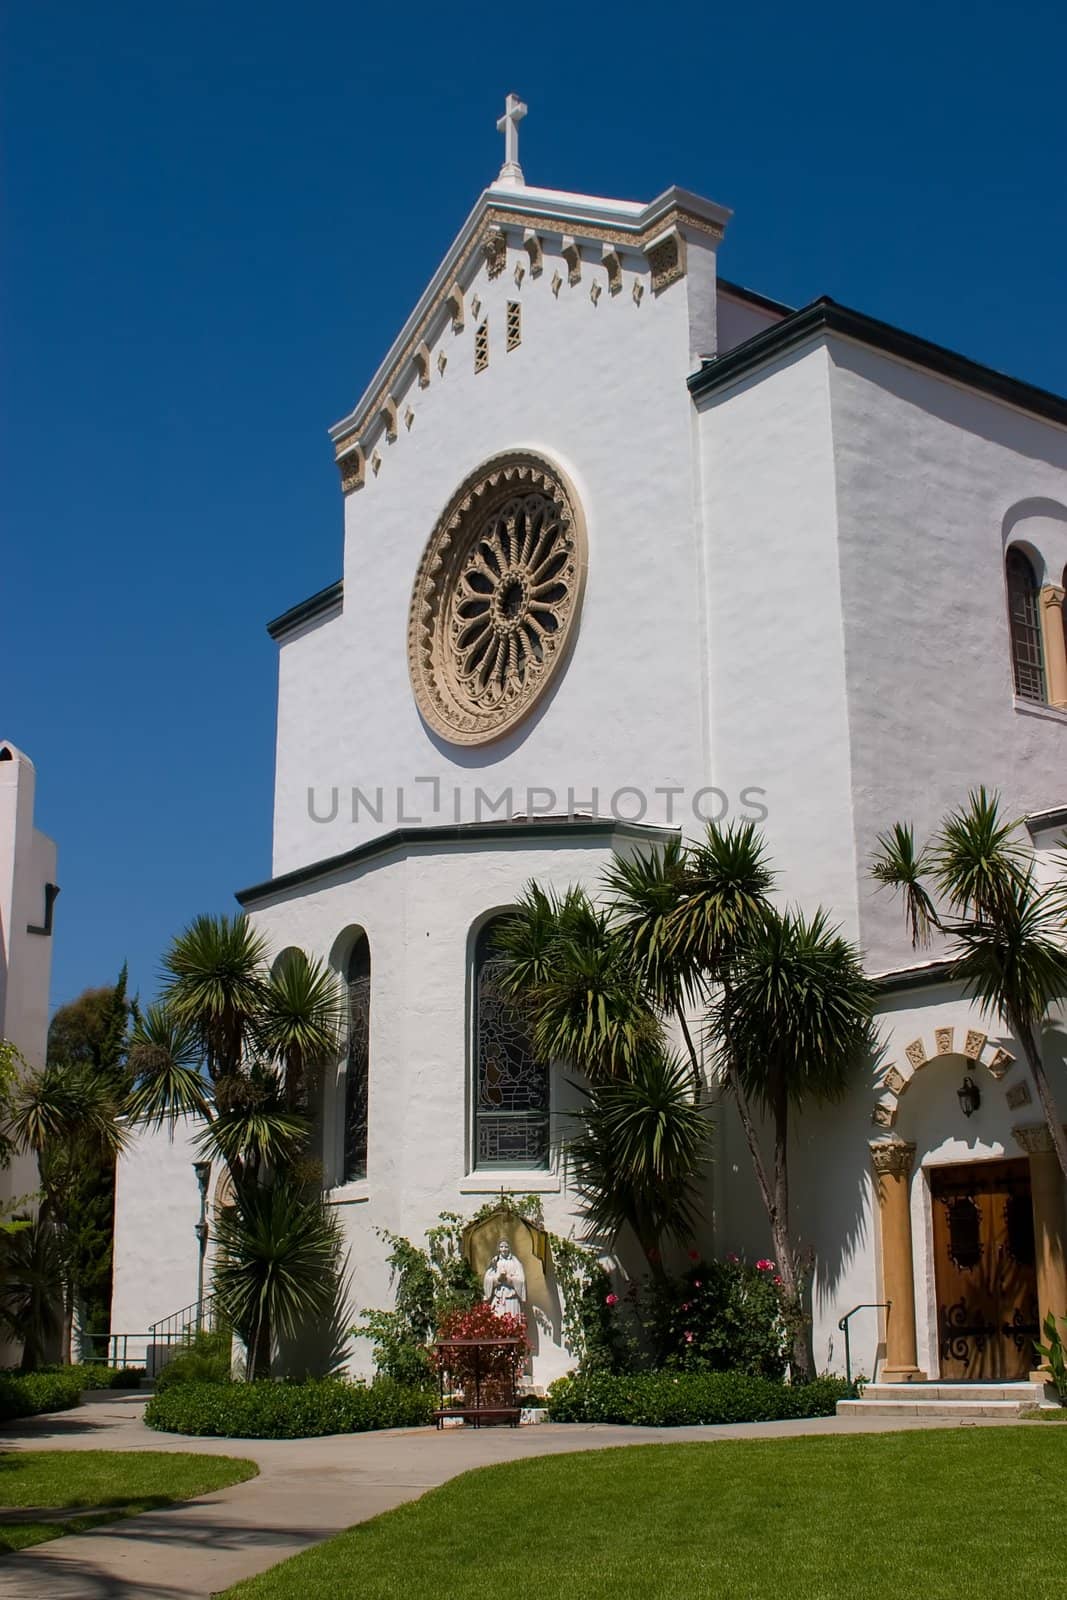 Historic Spanish mission in Santa Barbara, California